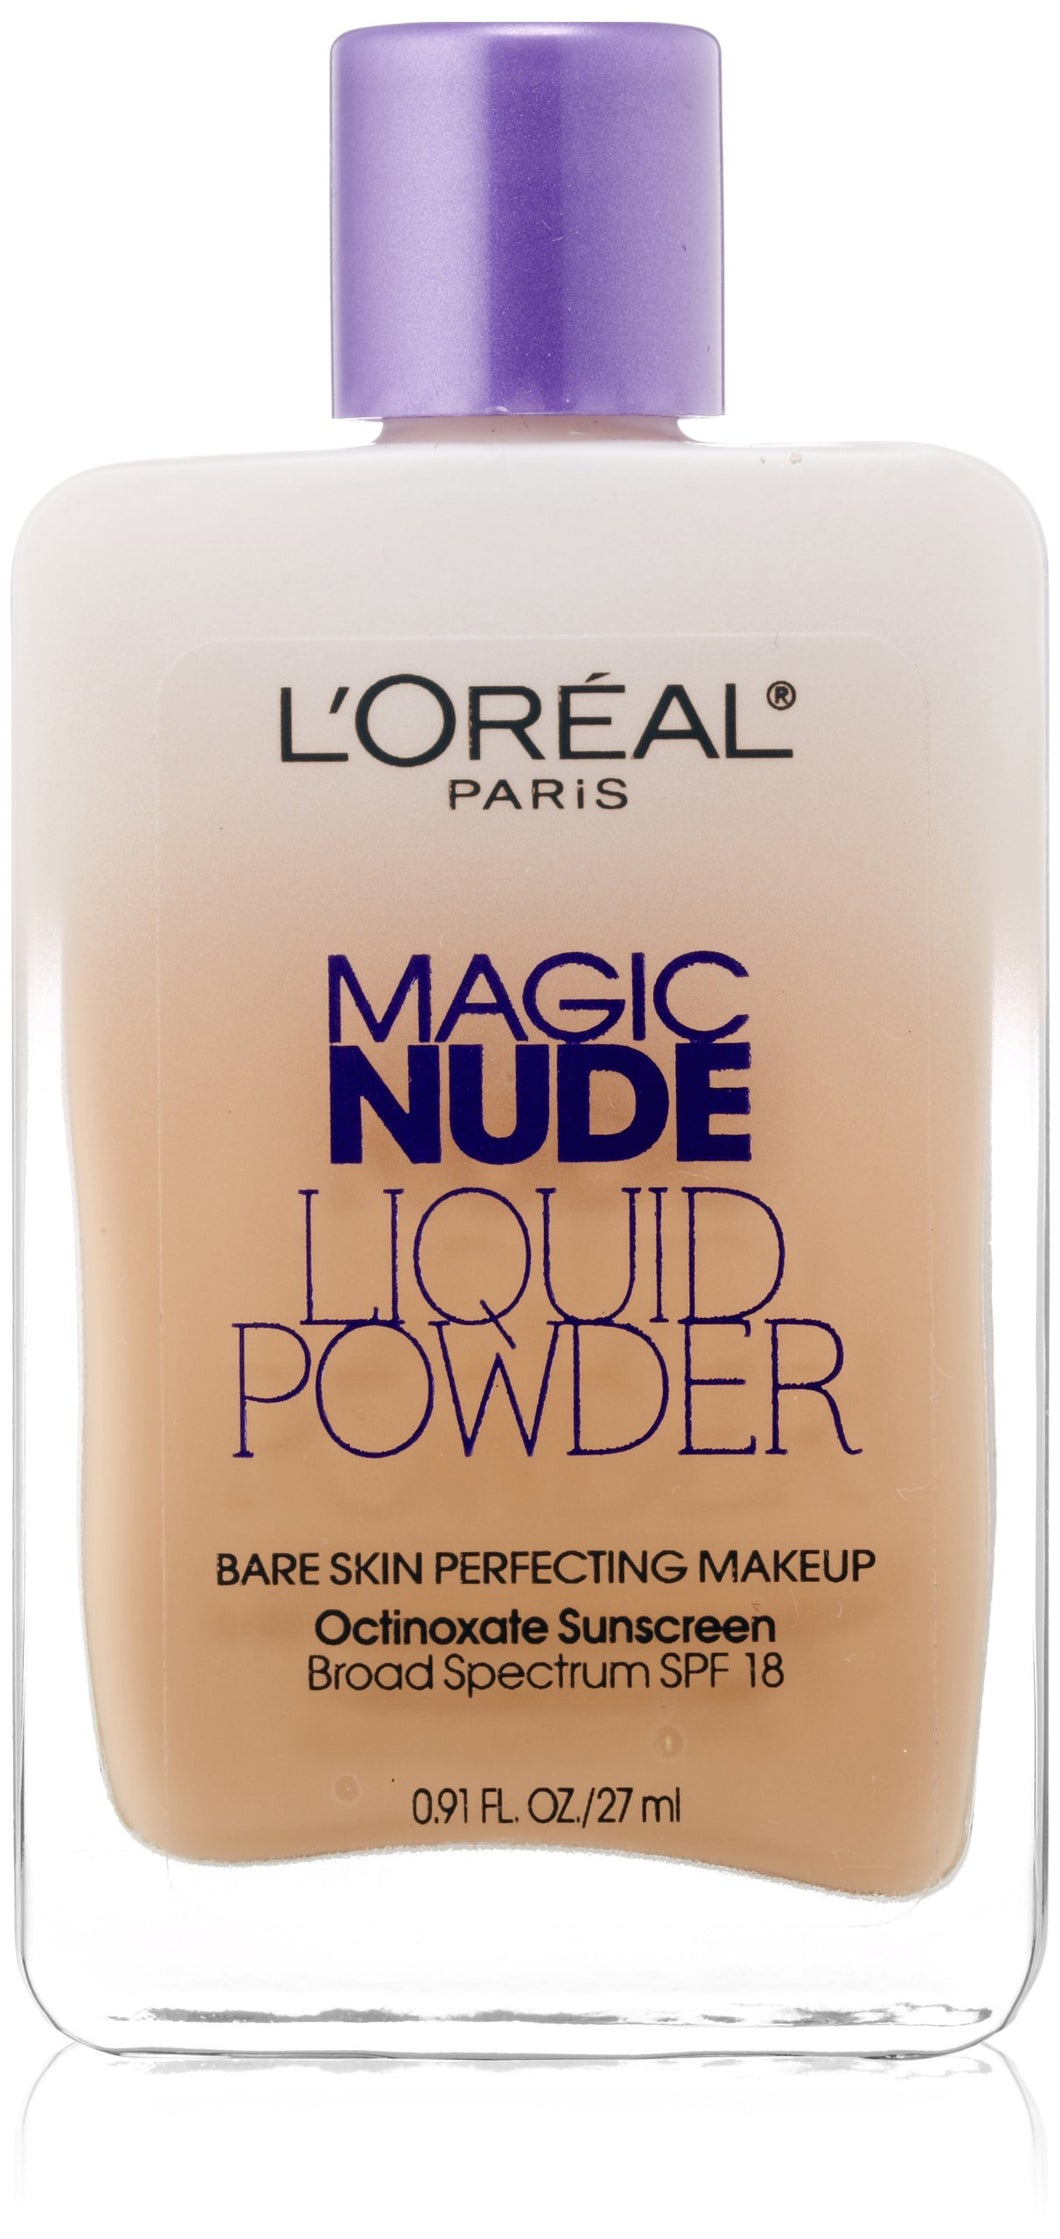 L'Oreal Paris Magic Nude Liquid Powder Bare Skin Perfecting Makeup SPF 18, Classic Ivory, 0.91 Ounces